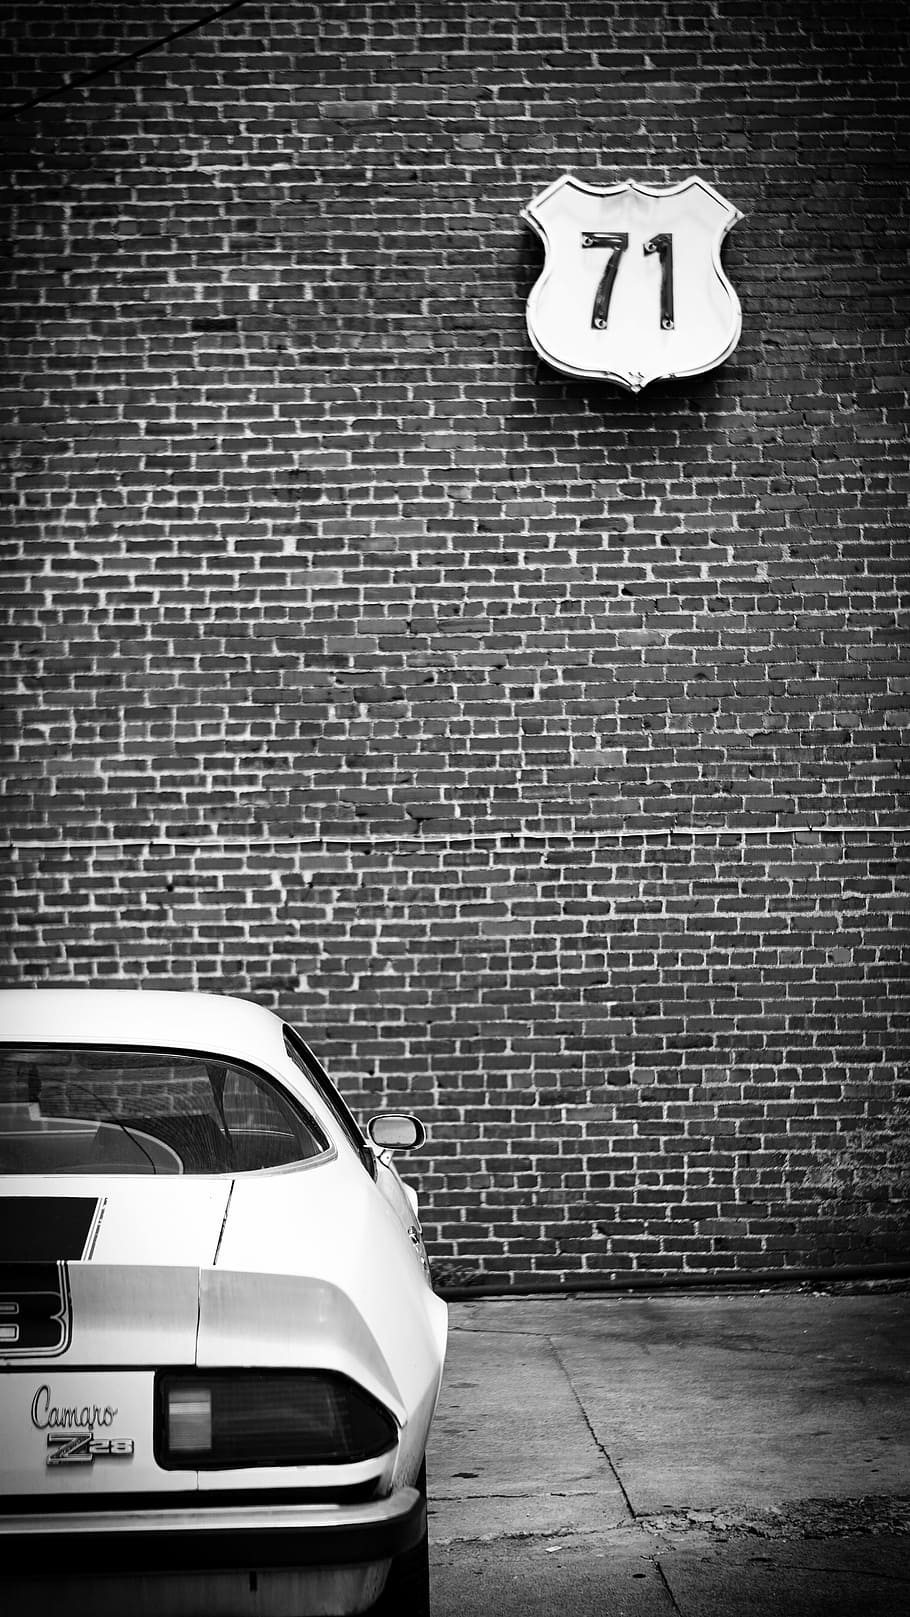 camaro, car, black and white, transport, vintage, retro, brick, wall, city, street